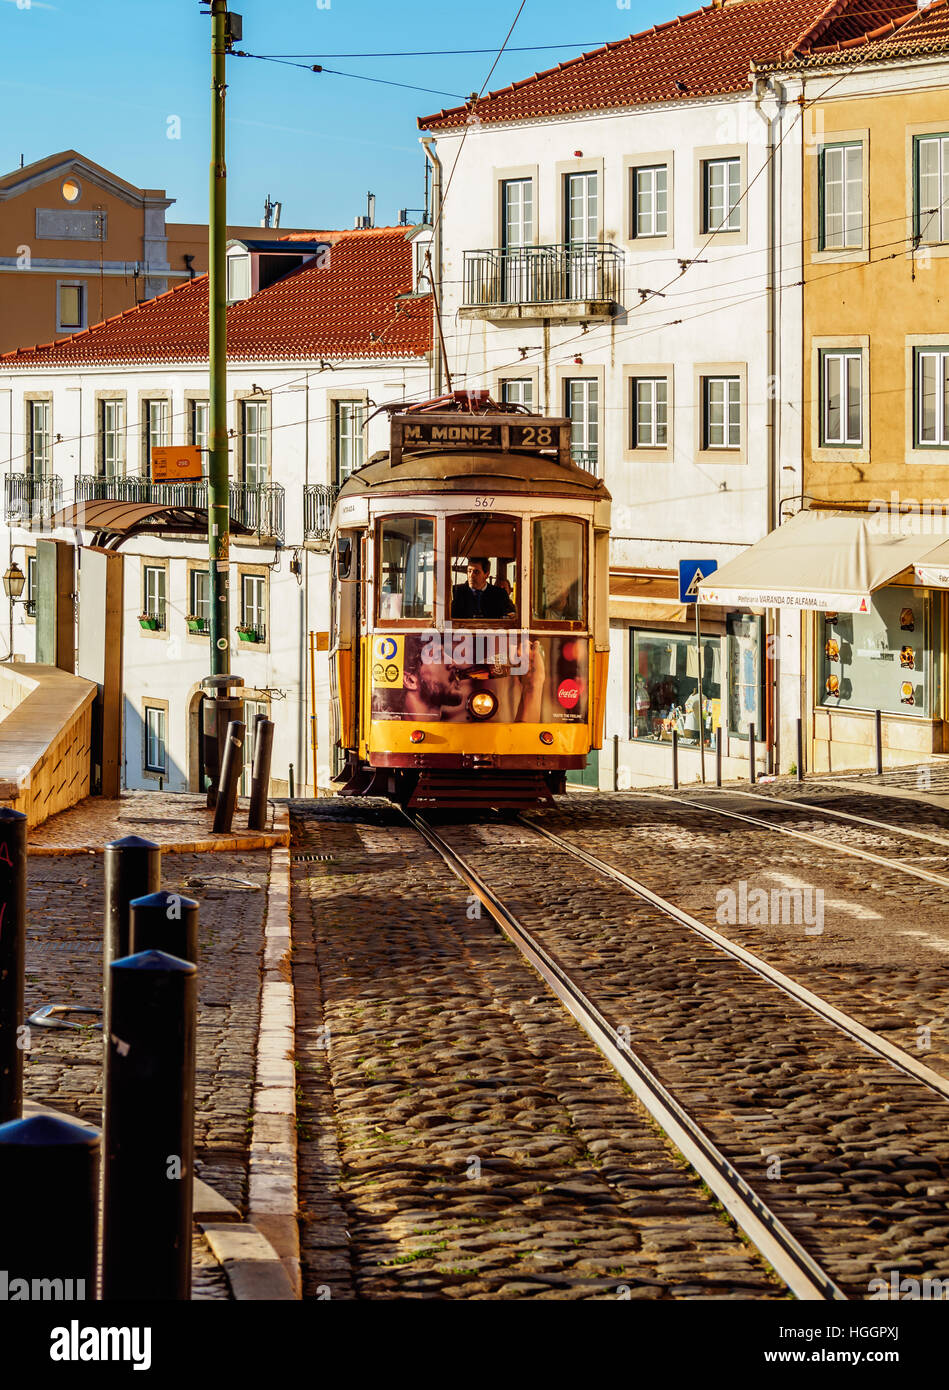 Portugal, Lisbon, Tram number 28 in Alfama. Stock Photo